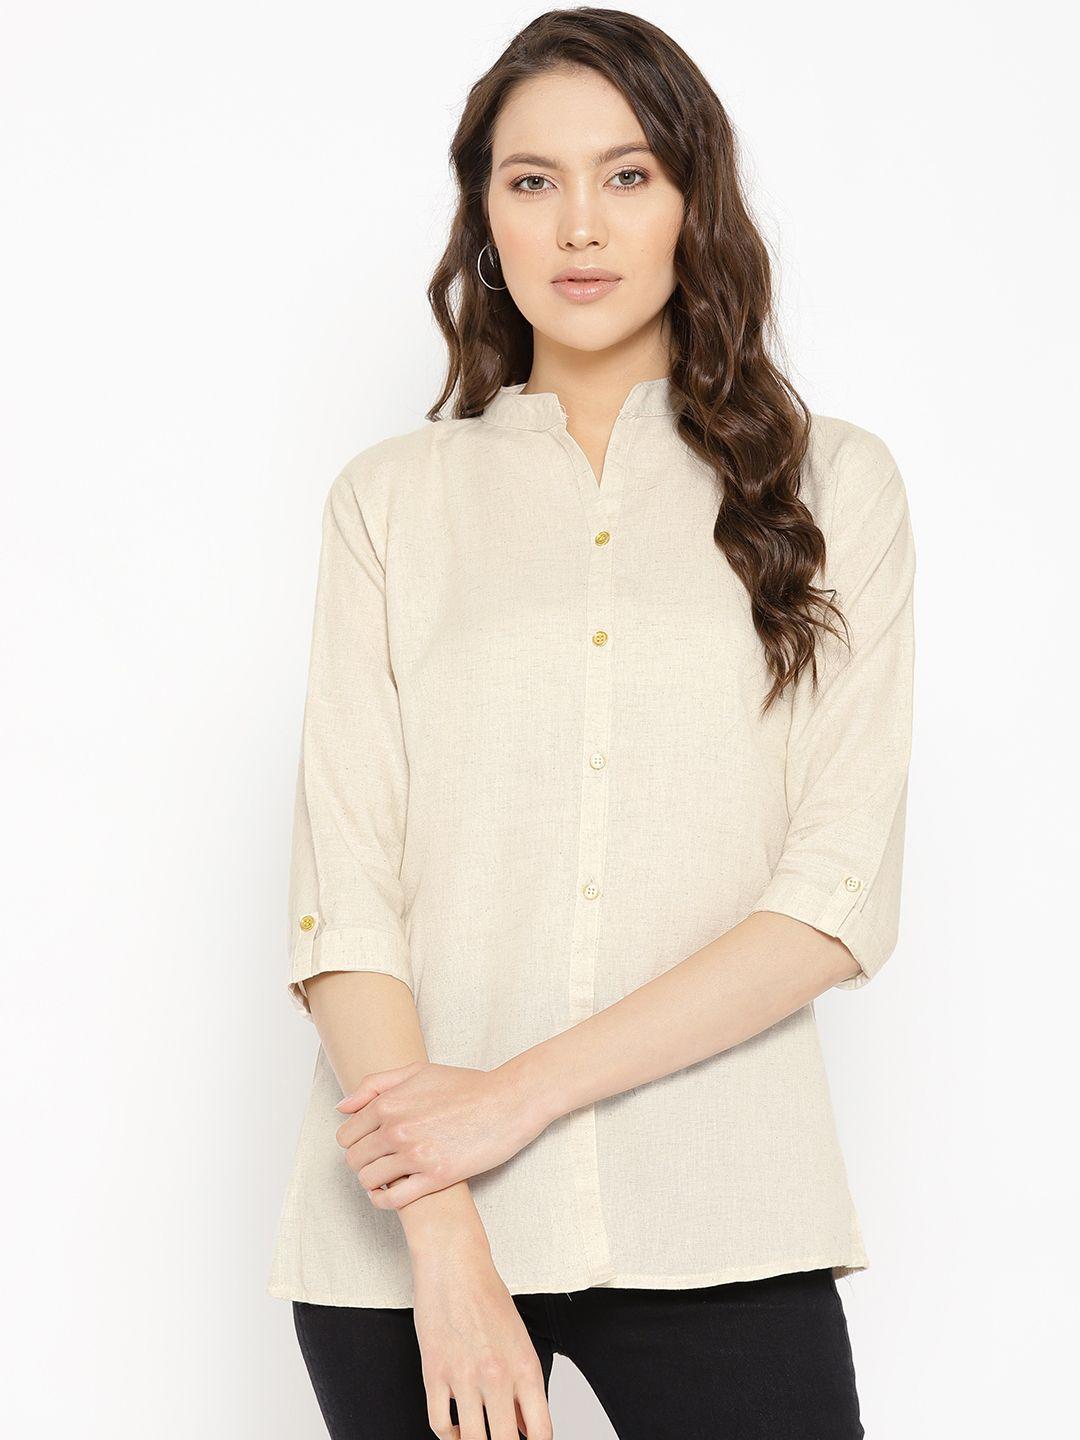 vastraa fusion women beige regular fit solid casual shirt